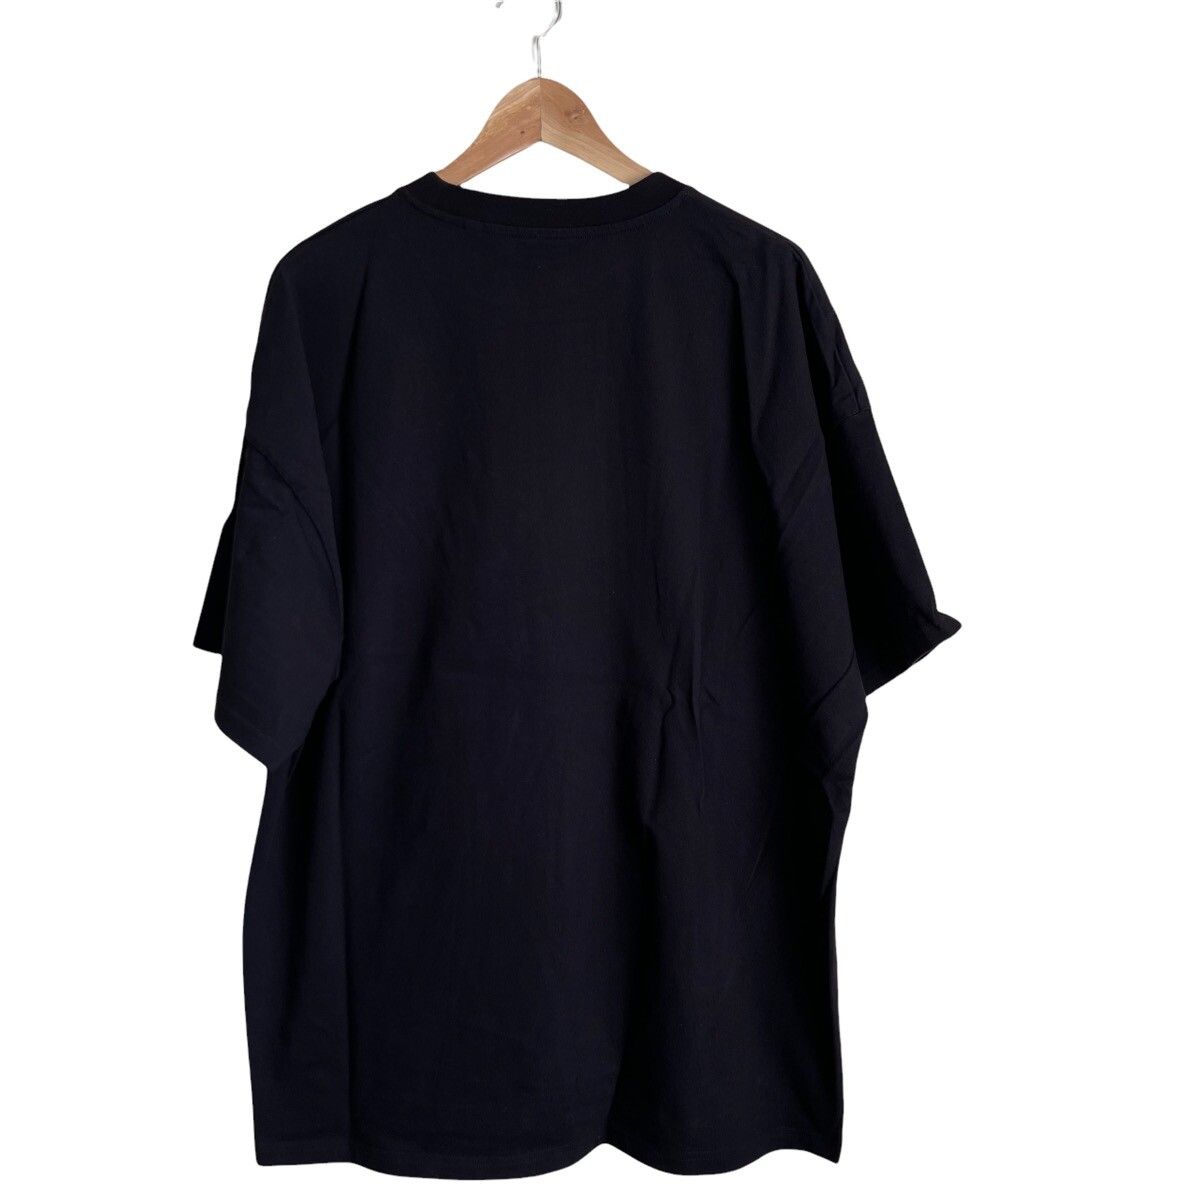 Frank Ocean Sergio Calabasas Frank Ocean Blonde t shirt size XL Size US XL / EU 56 / 4 - 3 Preview